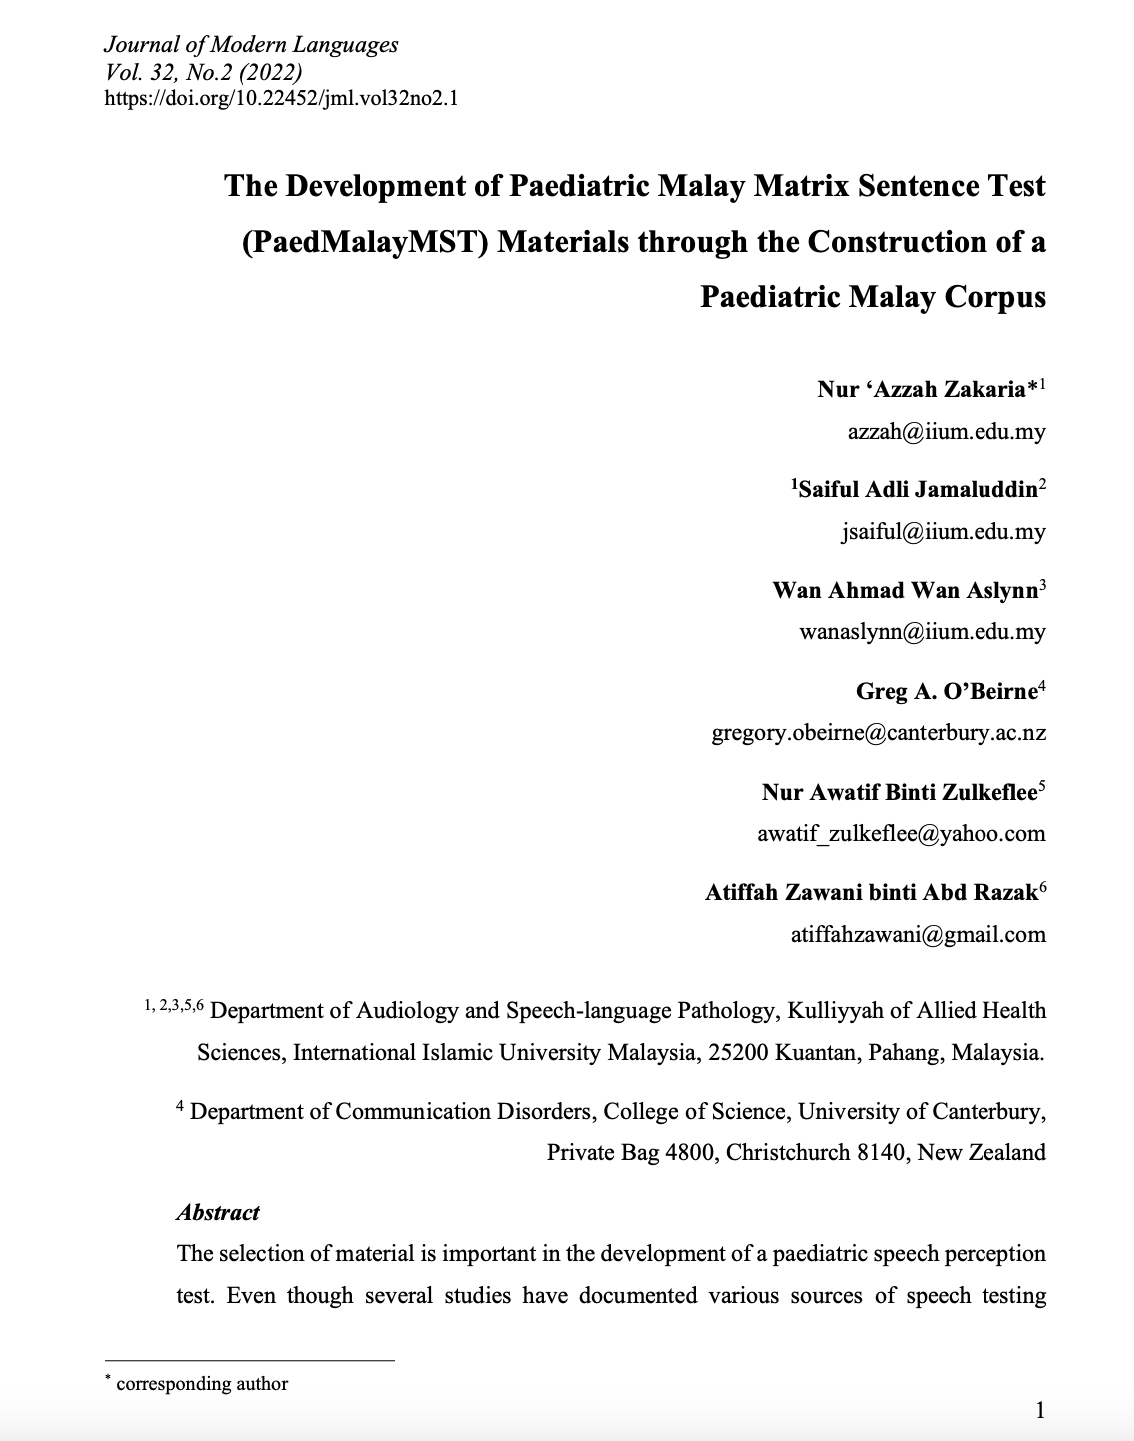 Article 1_The Development of Paediatric Malay Matrix Sentence Test (PaedMalayMST) Materials